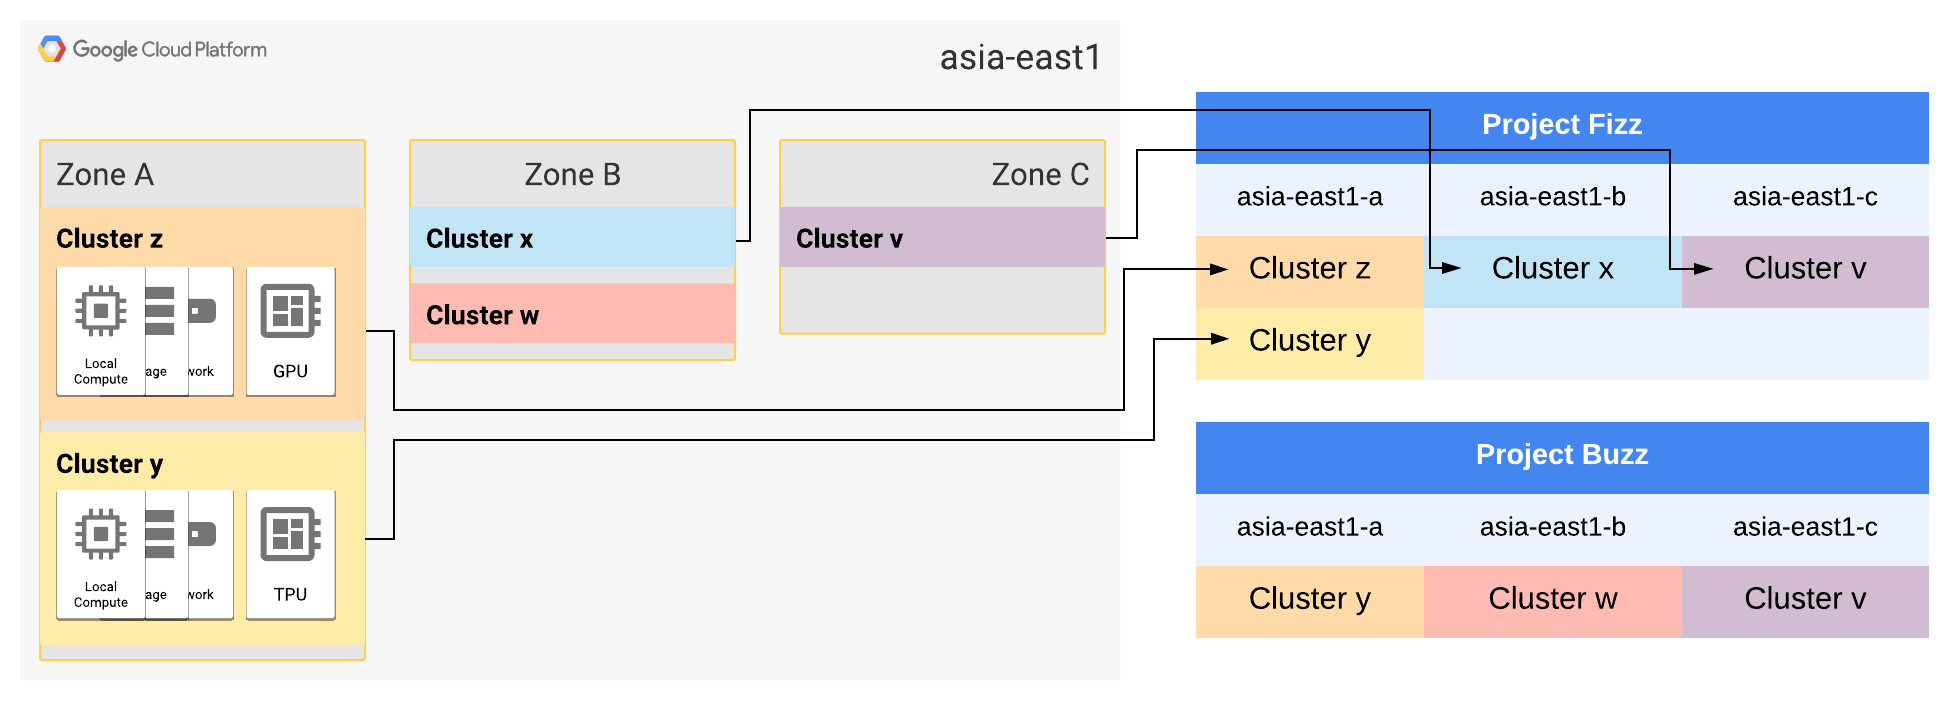 asia-east1 可用区 A 和 B 分别扩展为两个集群。